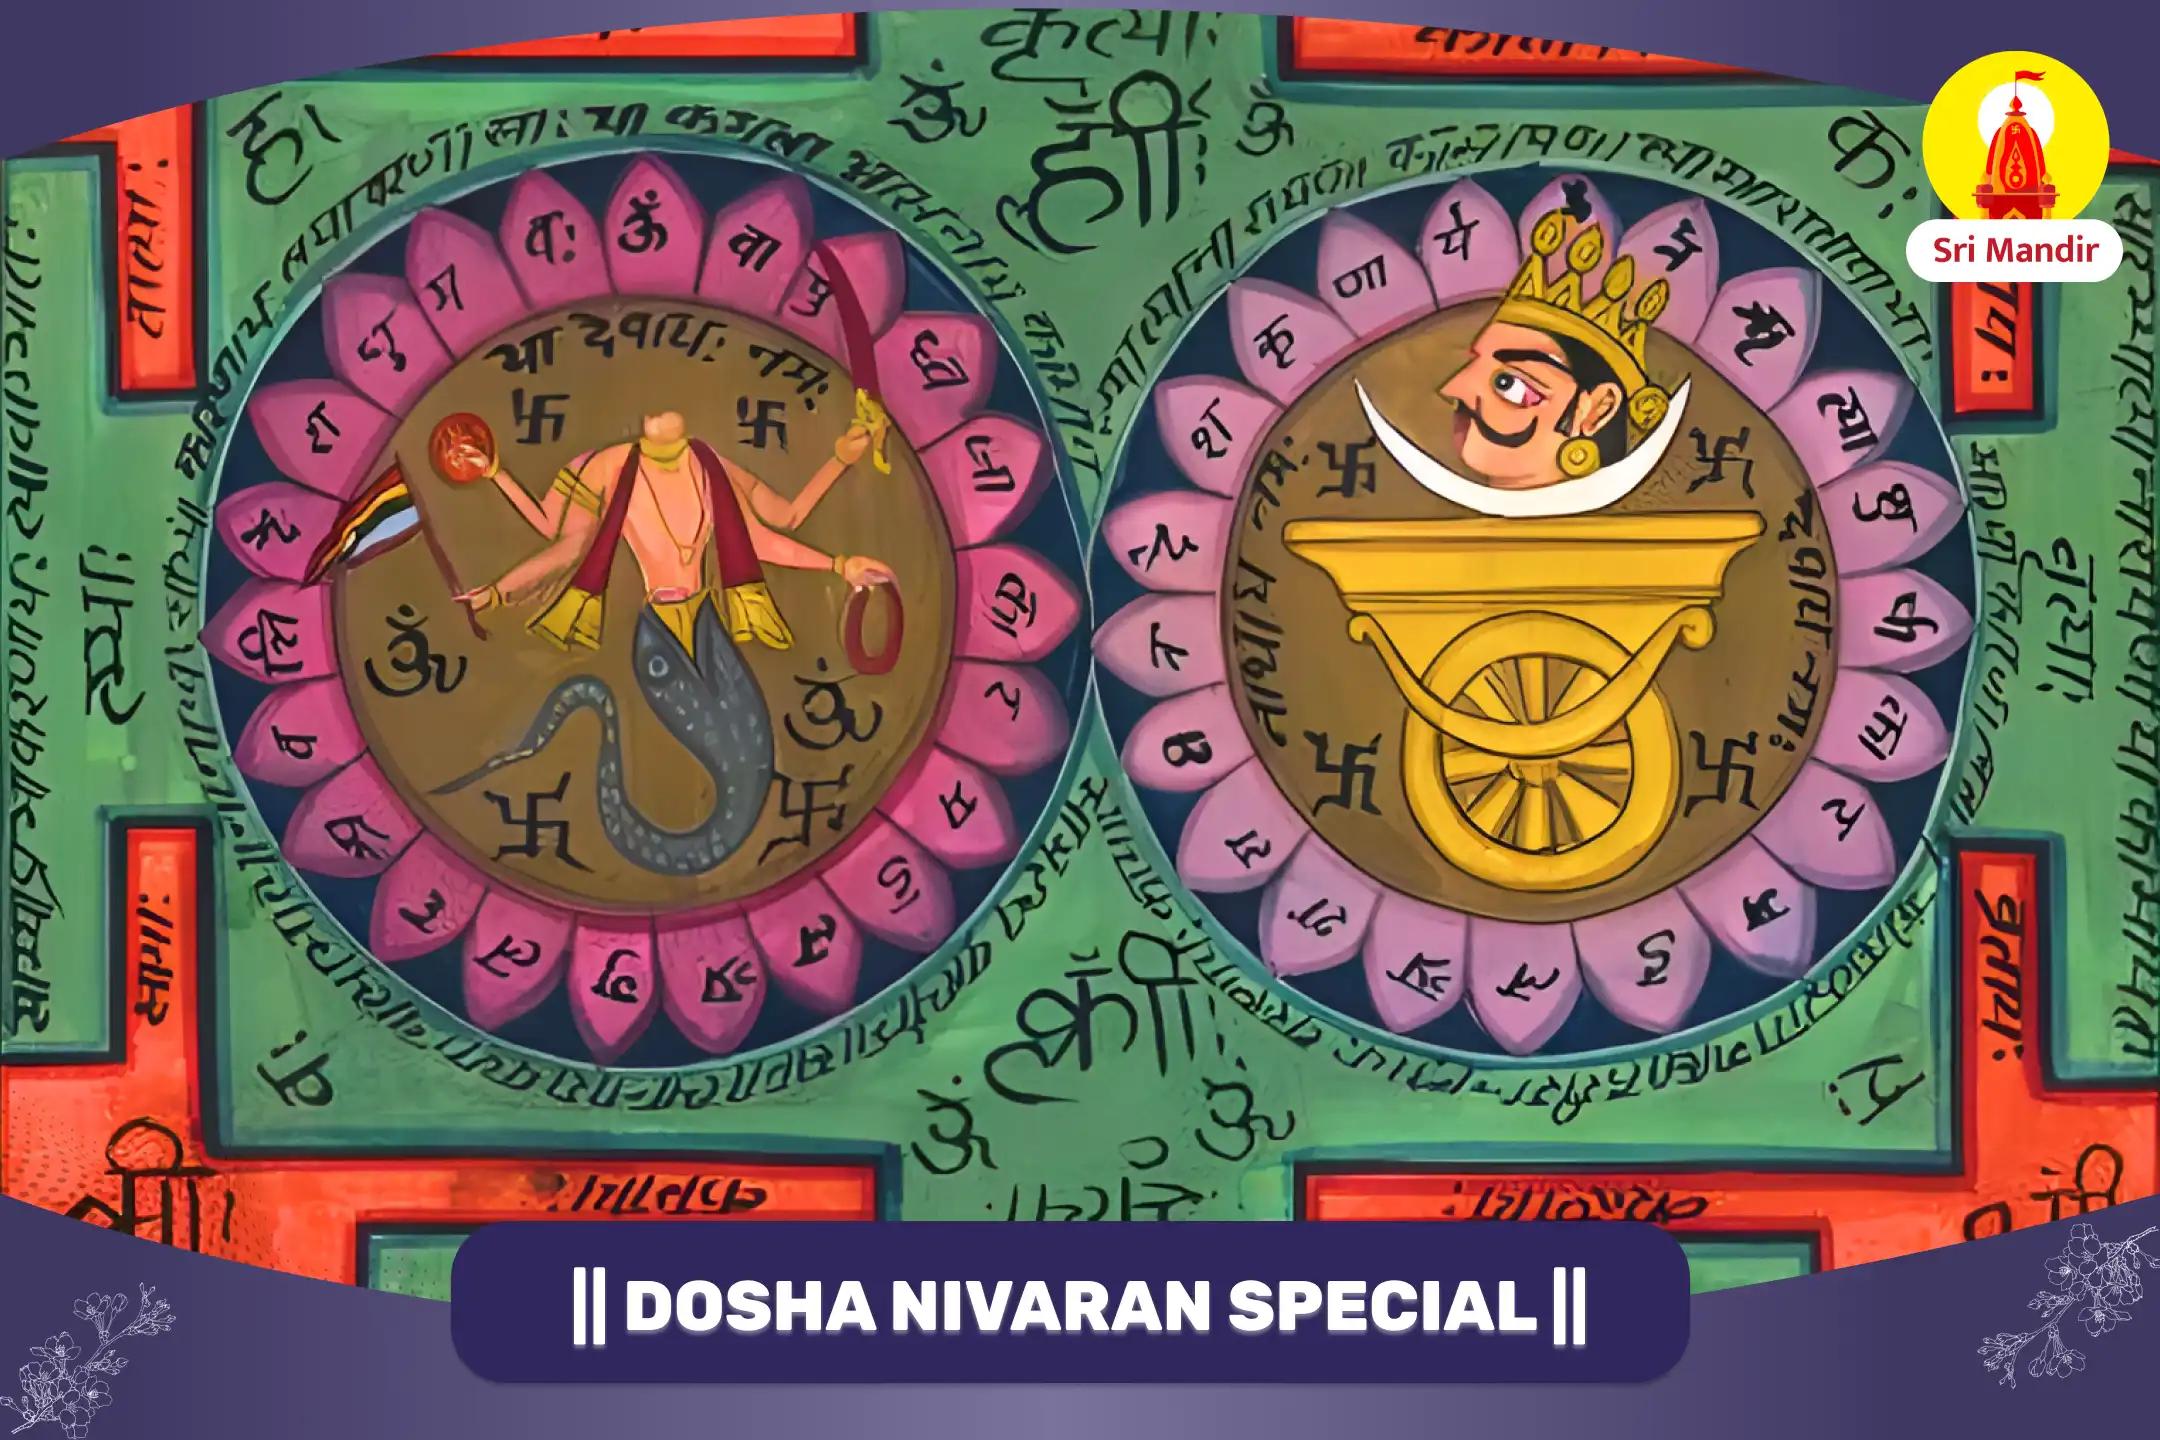 Rahu-Ketu Dosha Nivaran Puja For Removing Mental Agitation and Anxiety